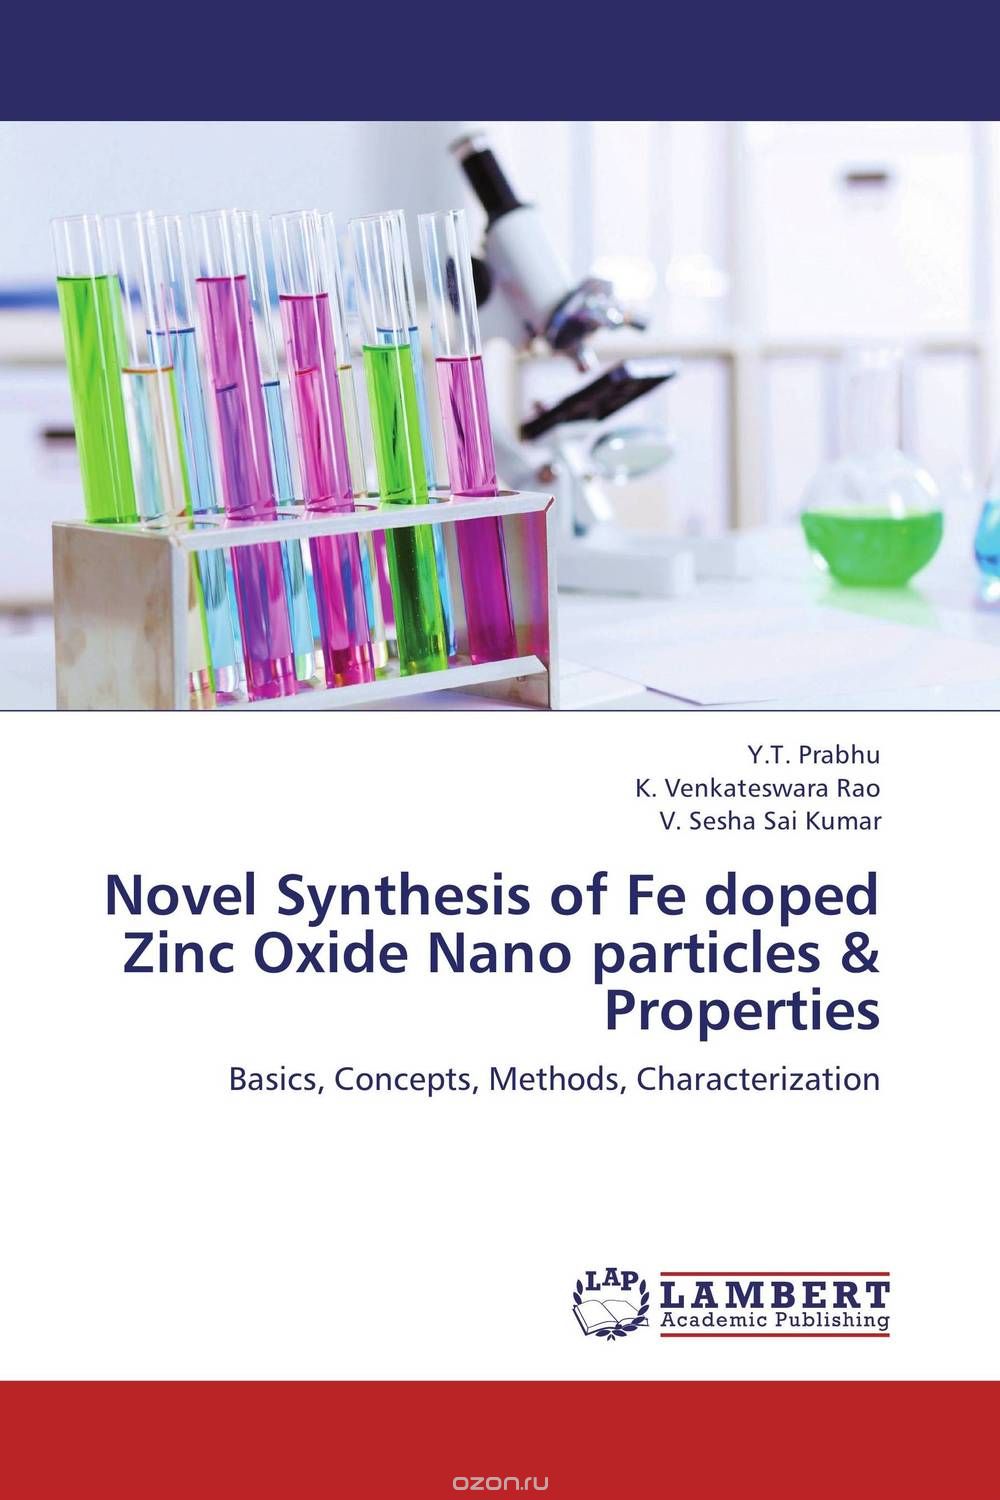 Скачать книгу "Novel Synthesis of Fe doped Zinc Oxide Nano particles & Properties"